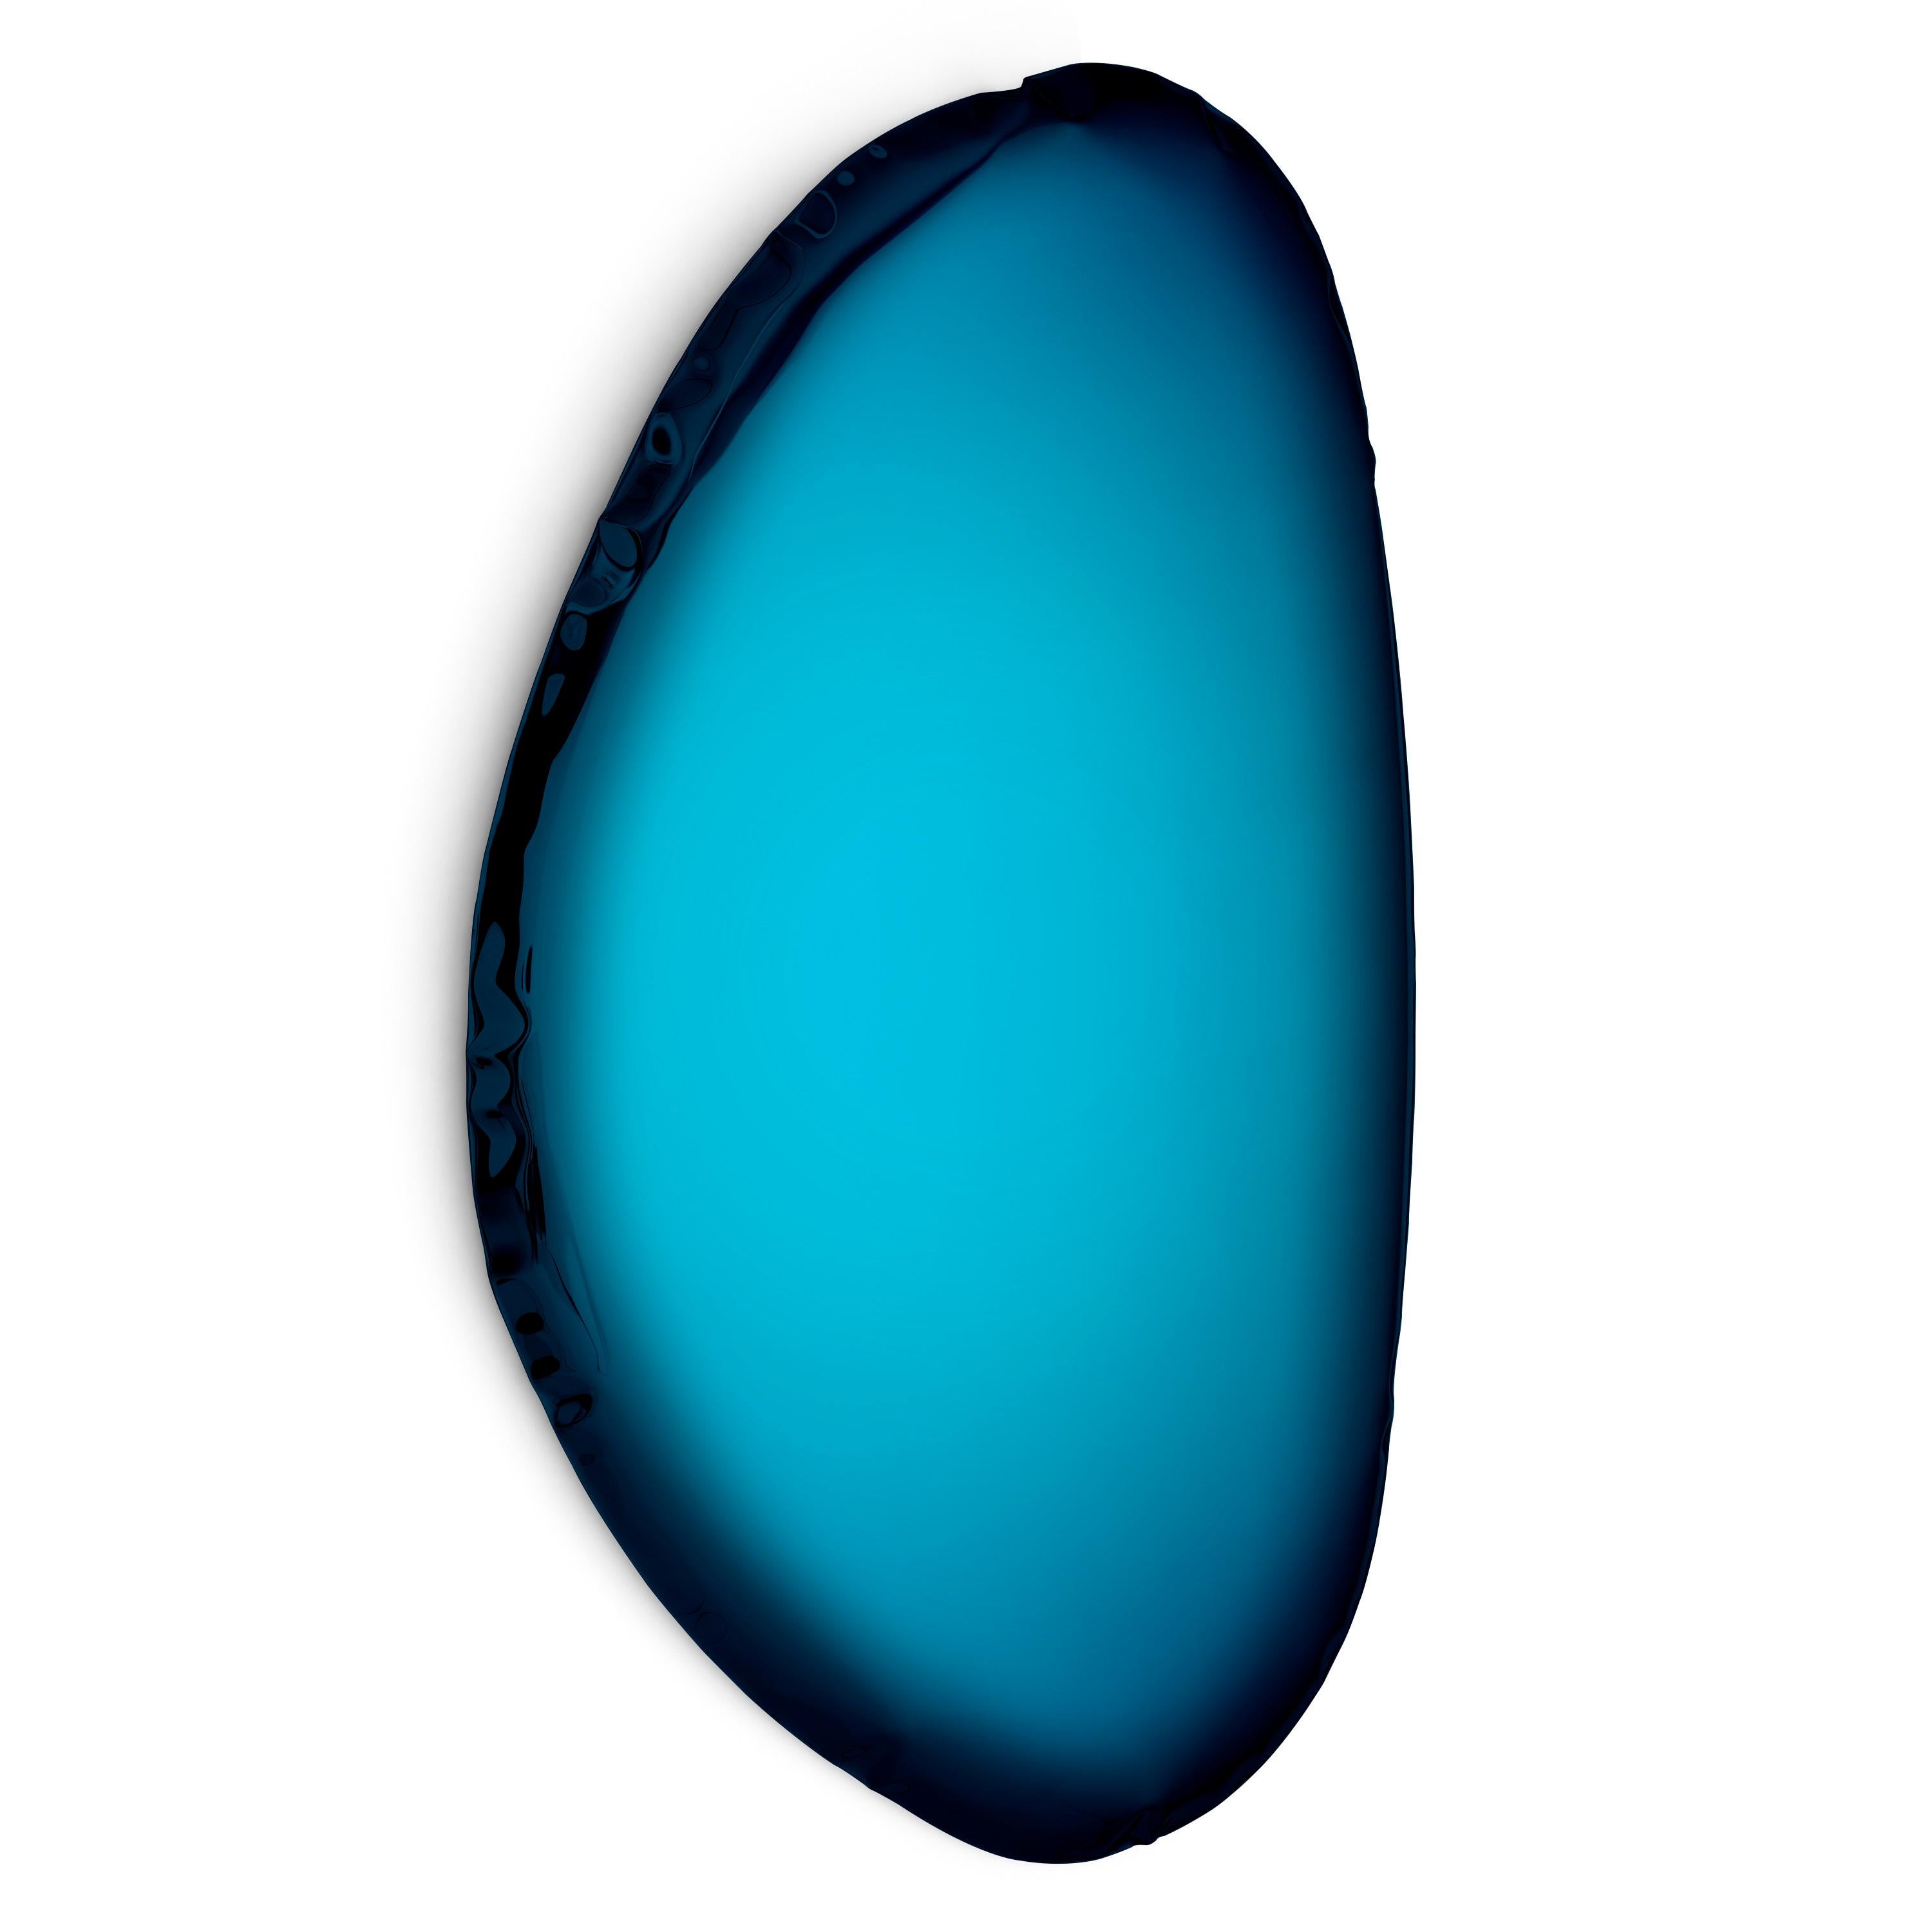 Miroir mural Tafla O3 bleu profond par Zieta
Dimensions : D 6 x L 79 x H 124 cm 
Matériau : Acier inoxydable.
Finition : Bleu espace profond. 
Finitions disponibles : Acier inoxydable, blanc mat, saphir/émeraude, saphir, émeraude, bleu espace